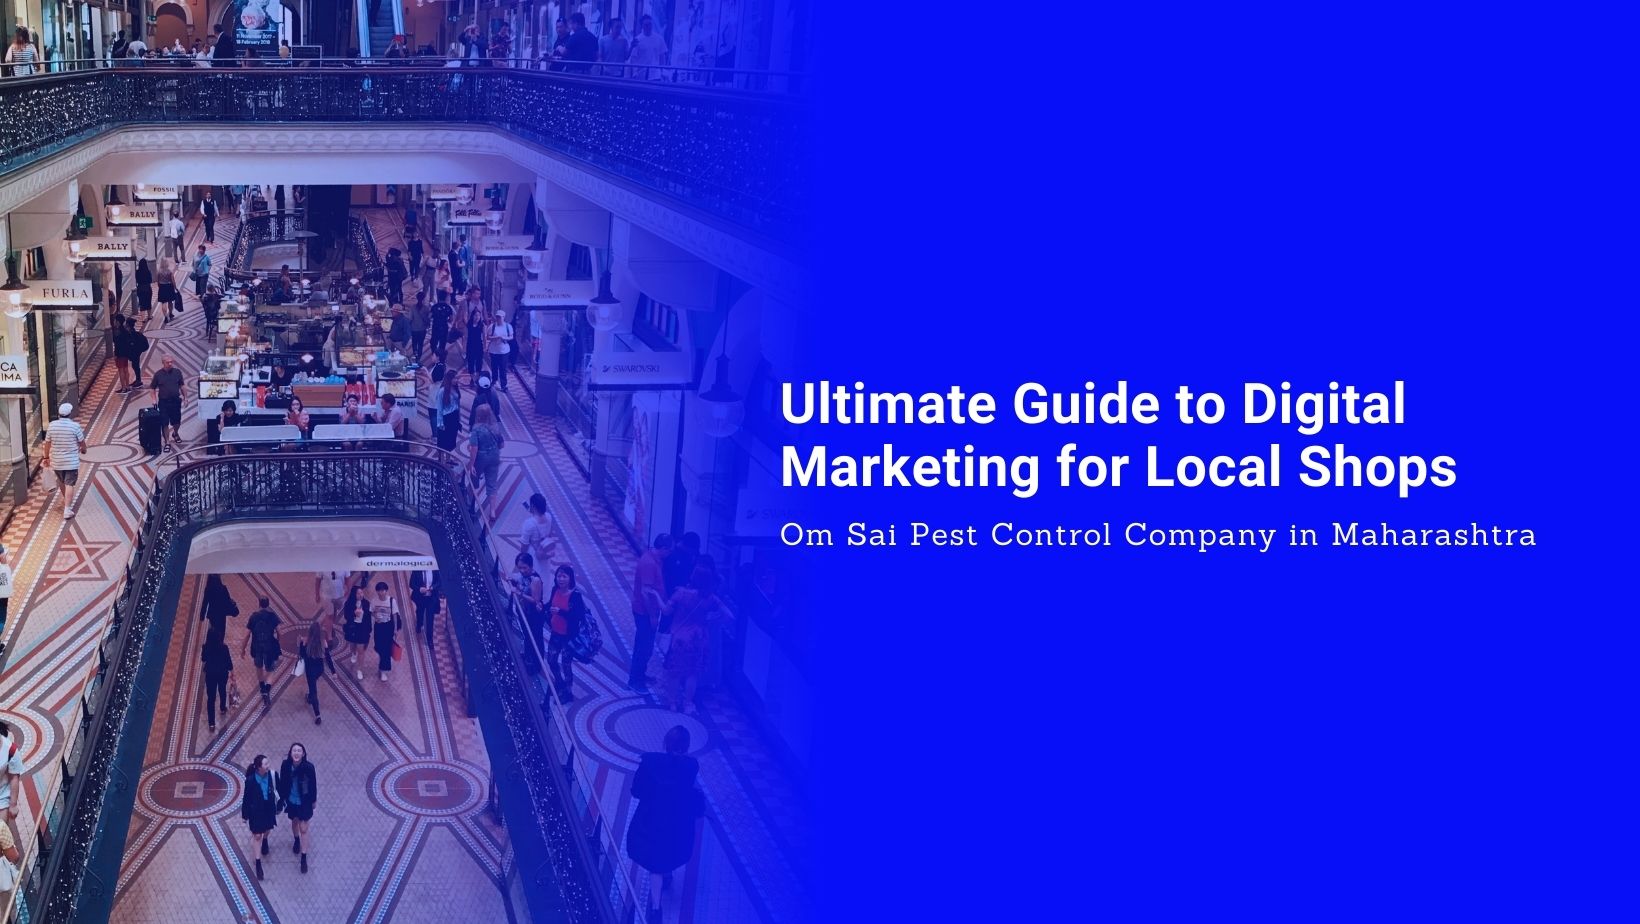  Digital Marketing Guide for Local Shops